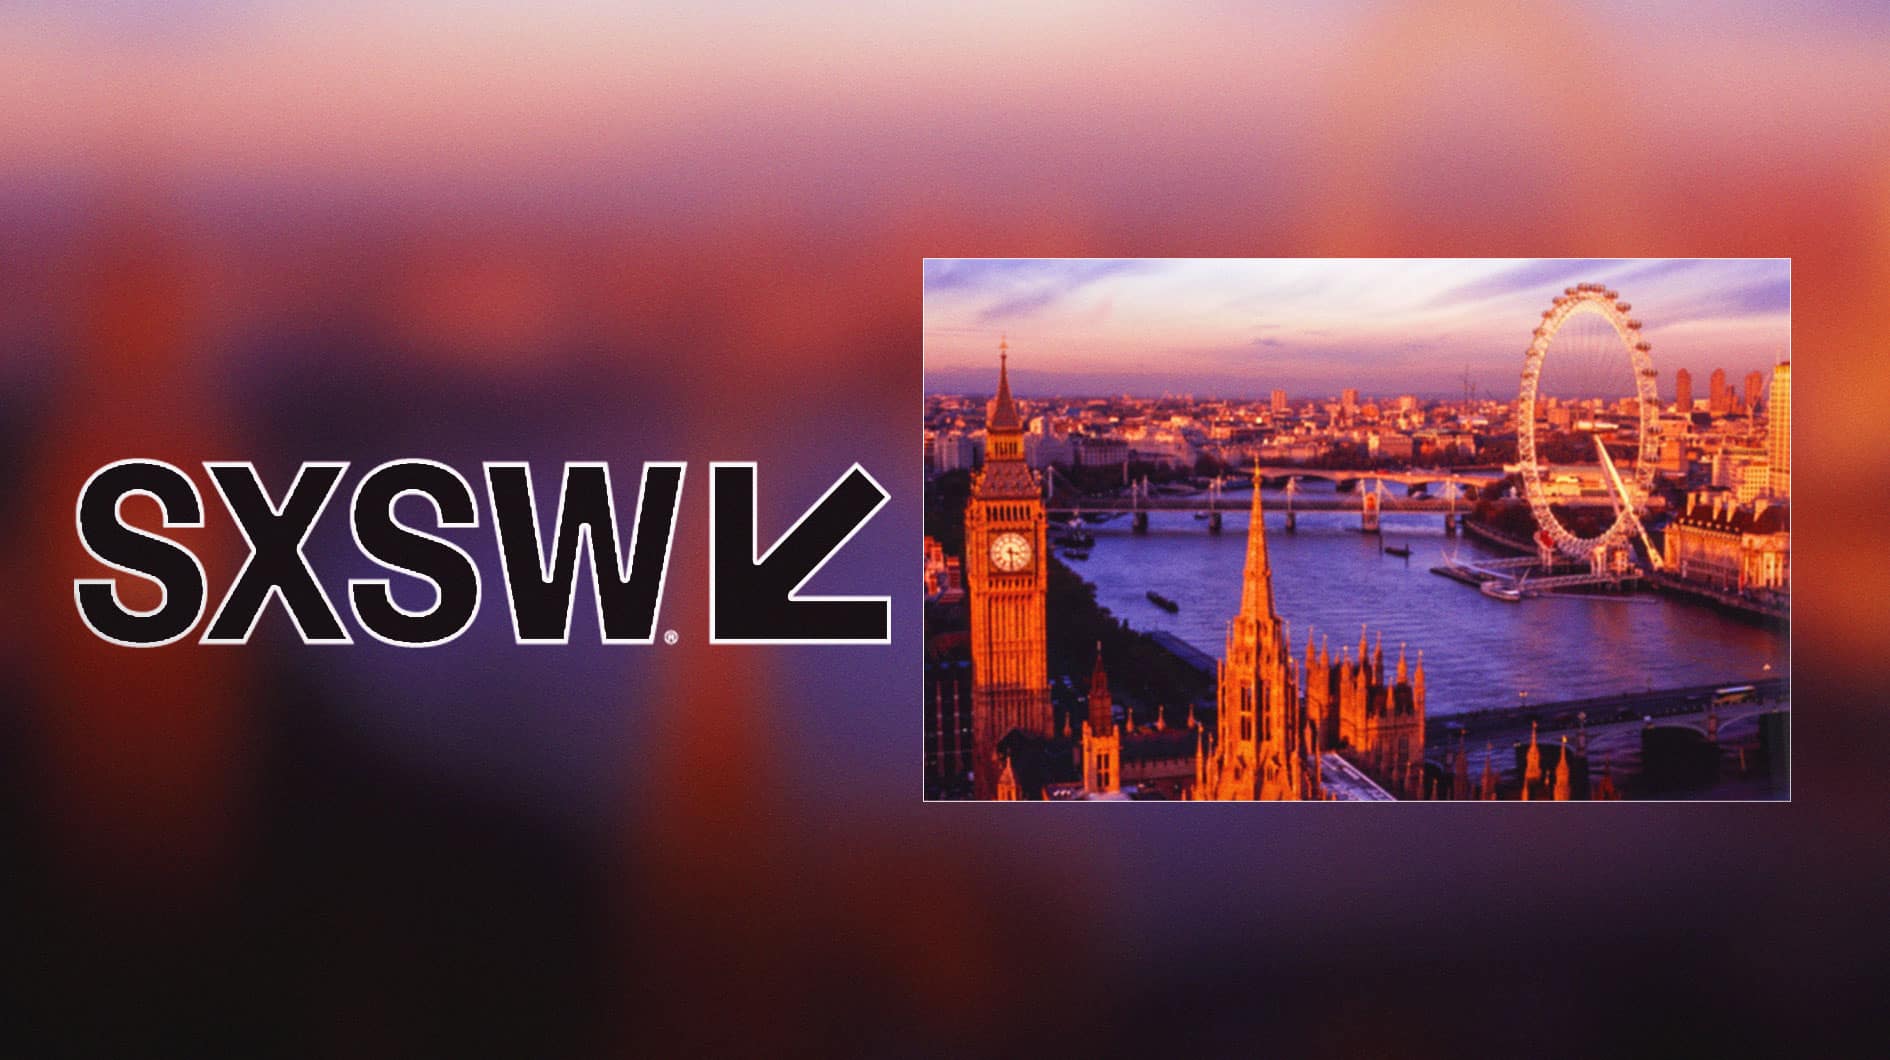 SXSW embarks on major London expansion journey